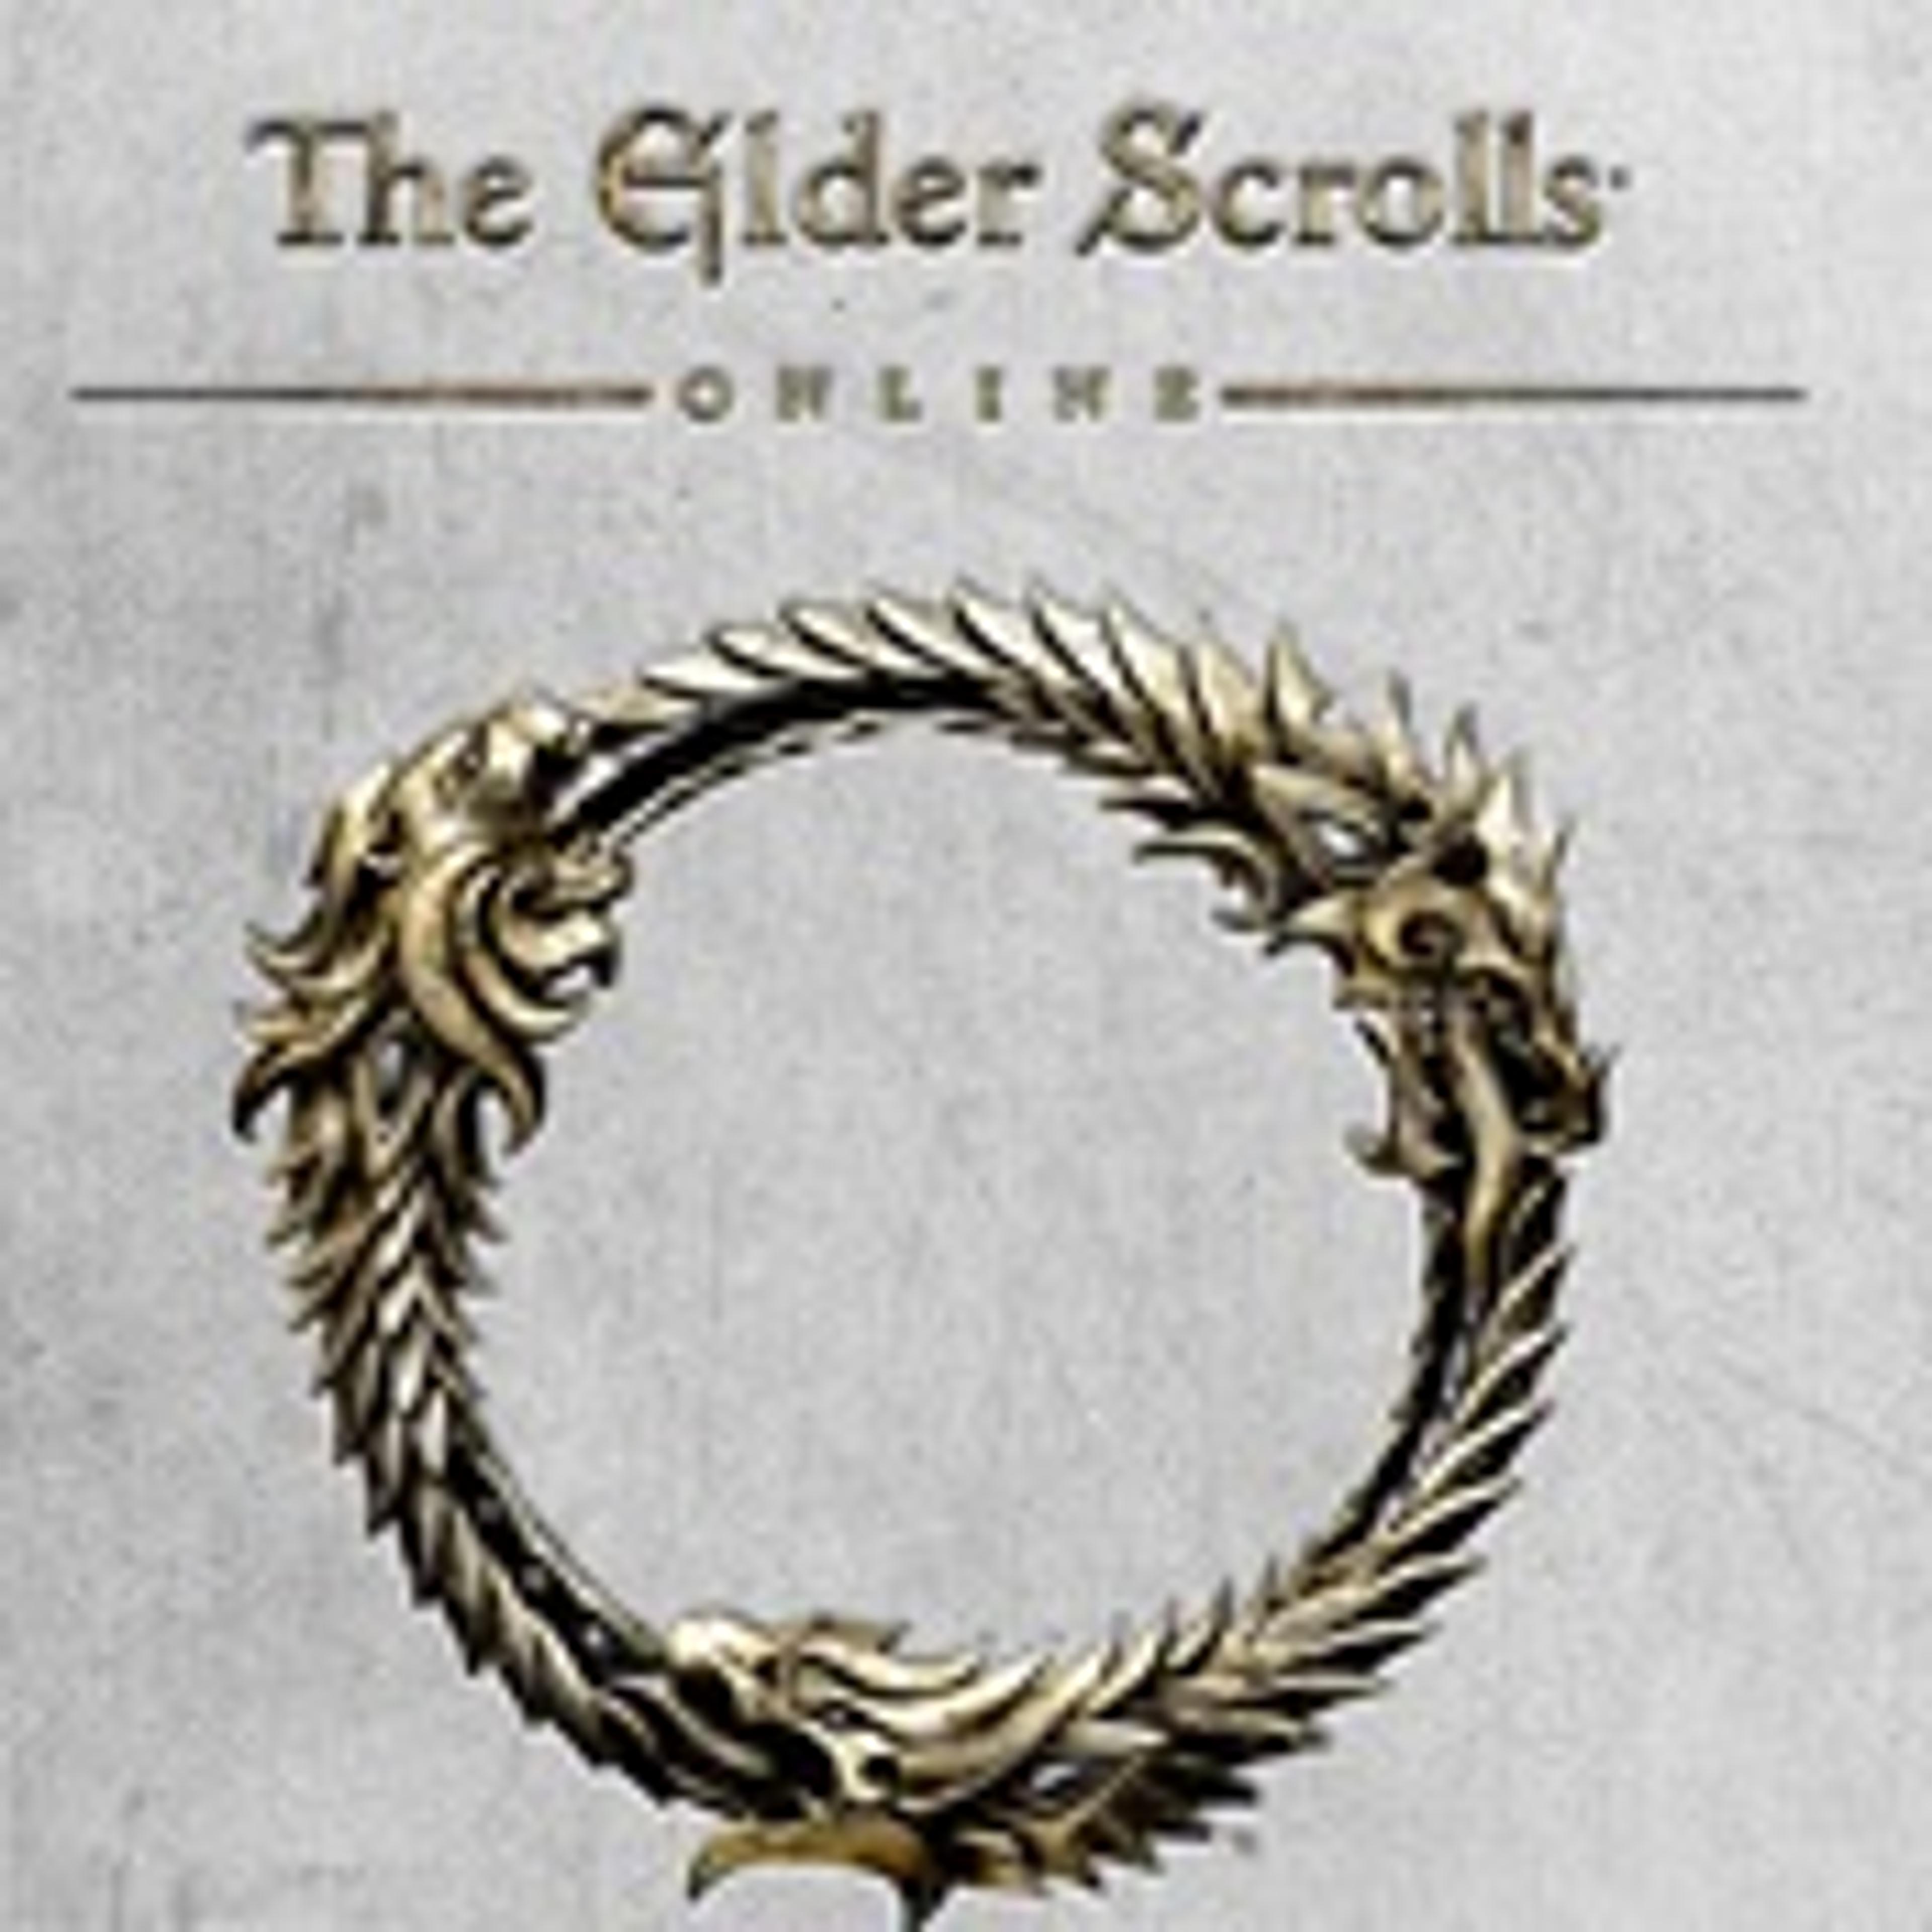 The Elder Scrolls Online via Steam Wallet Code